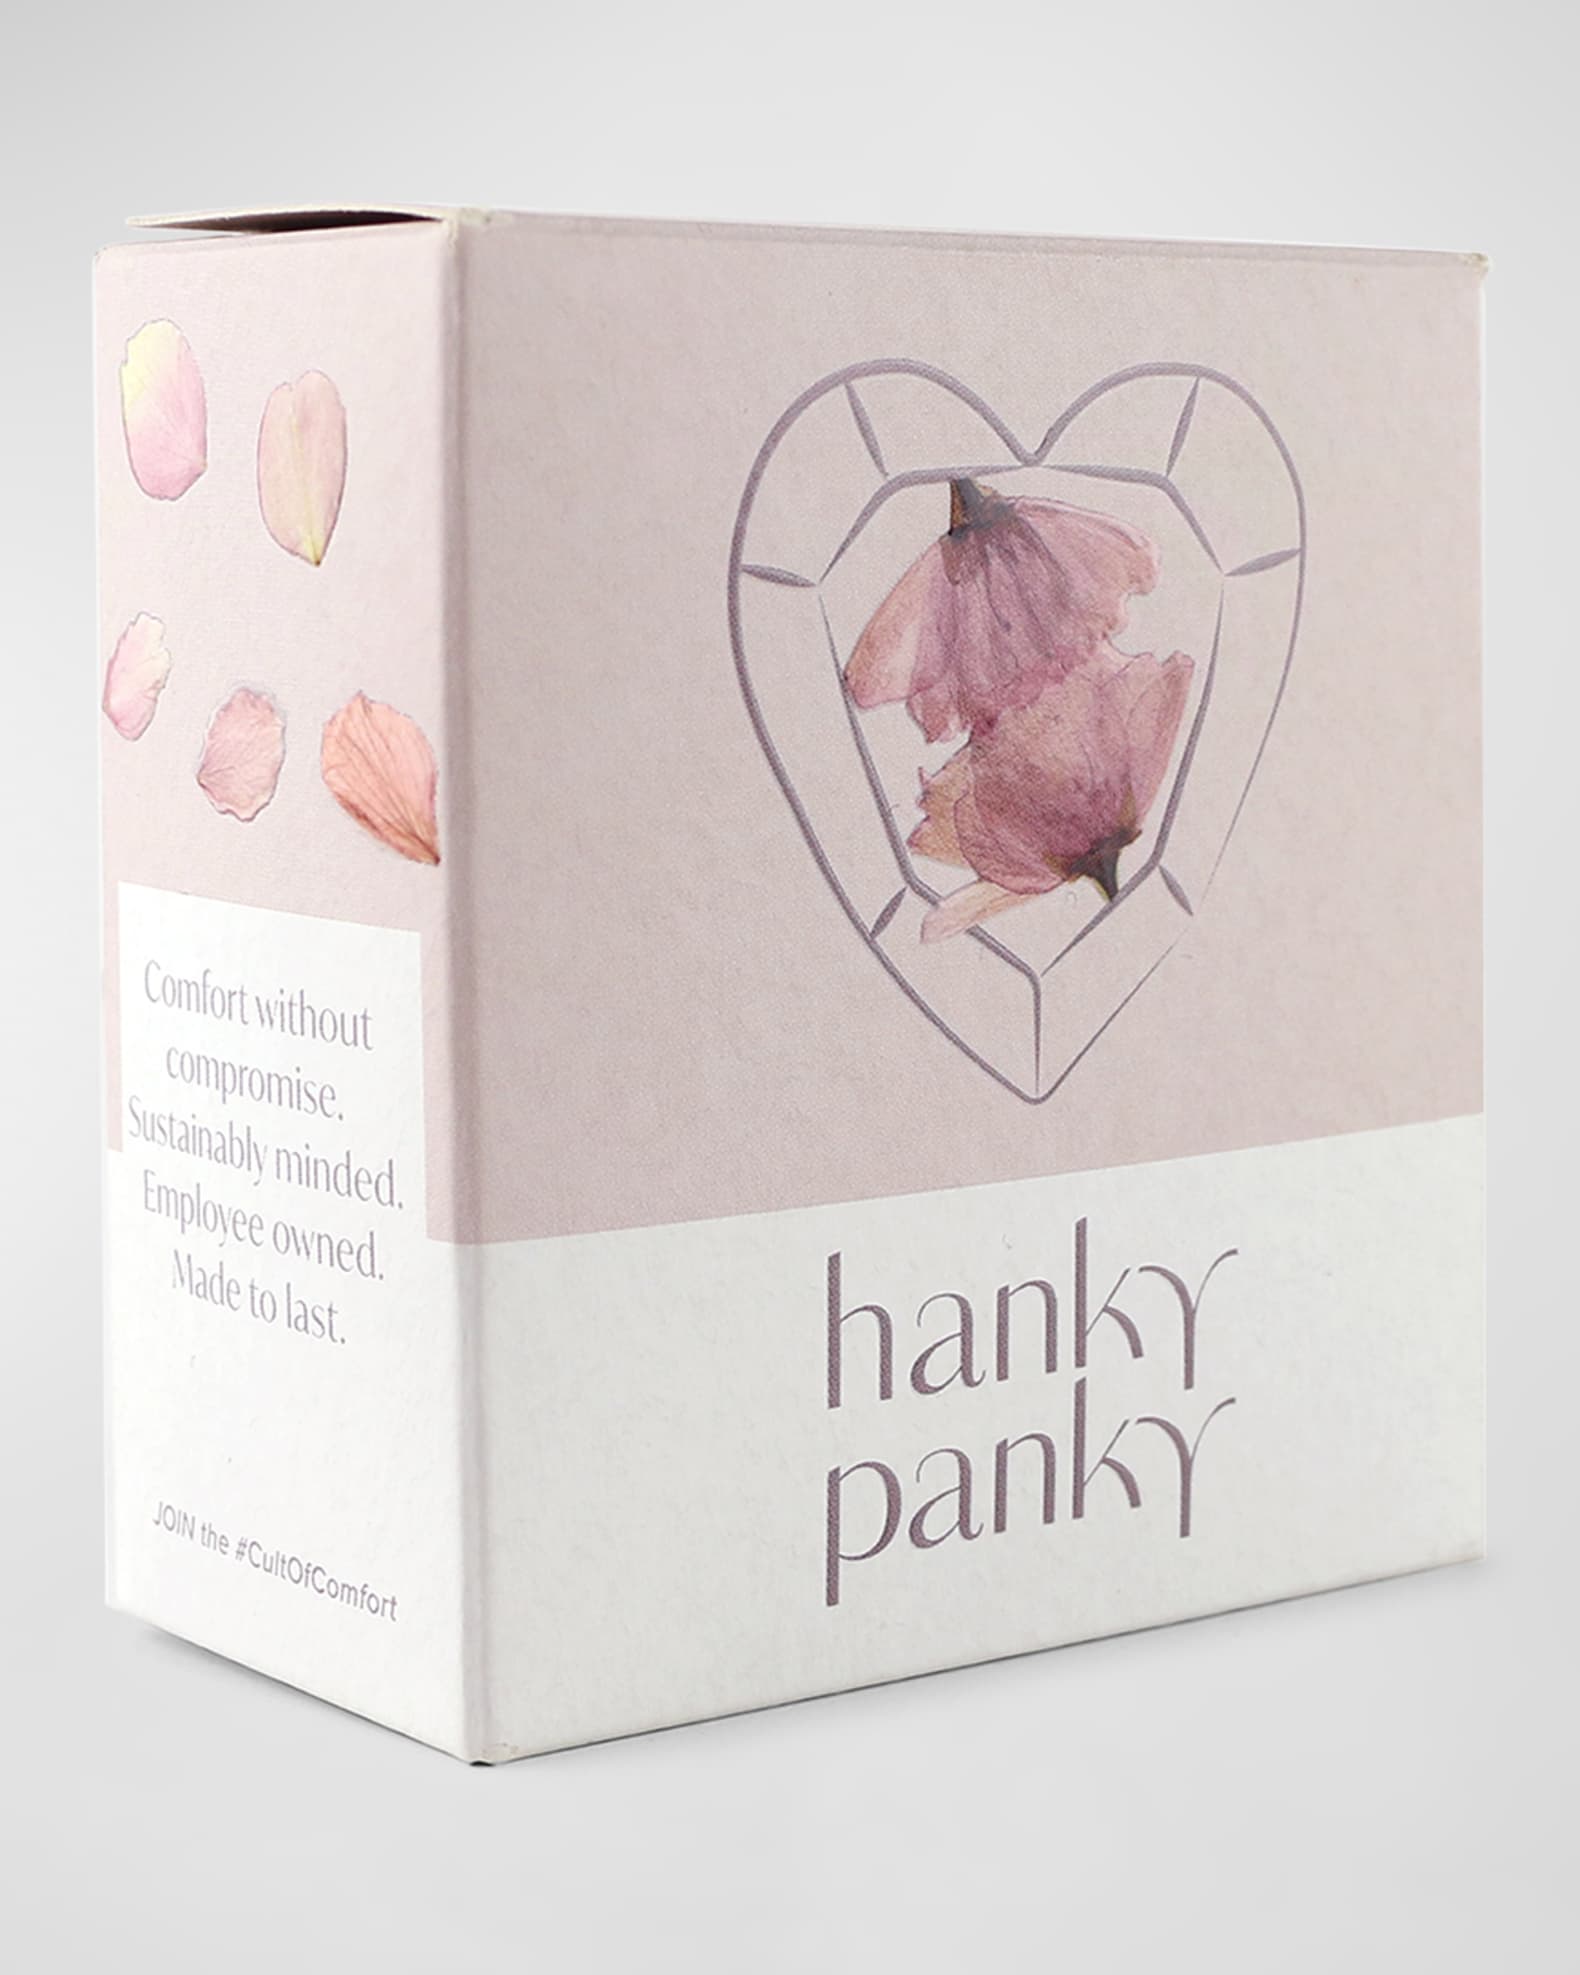 Honeymoon thong crotchless panties one size – Lalka Beauty Co.